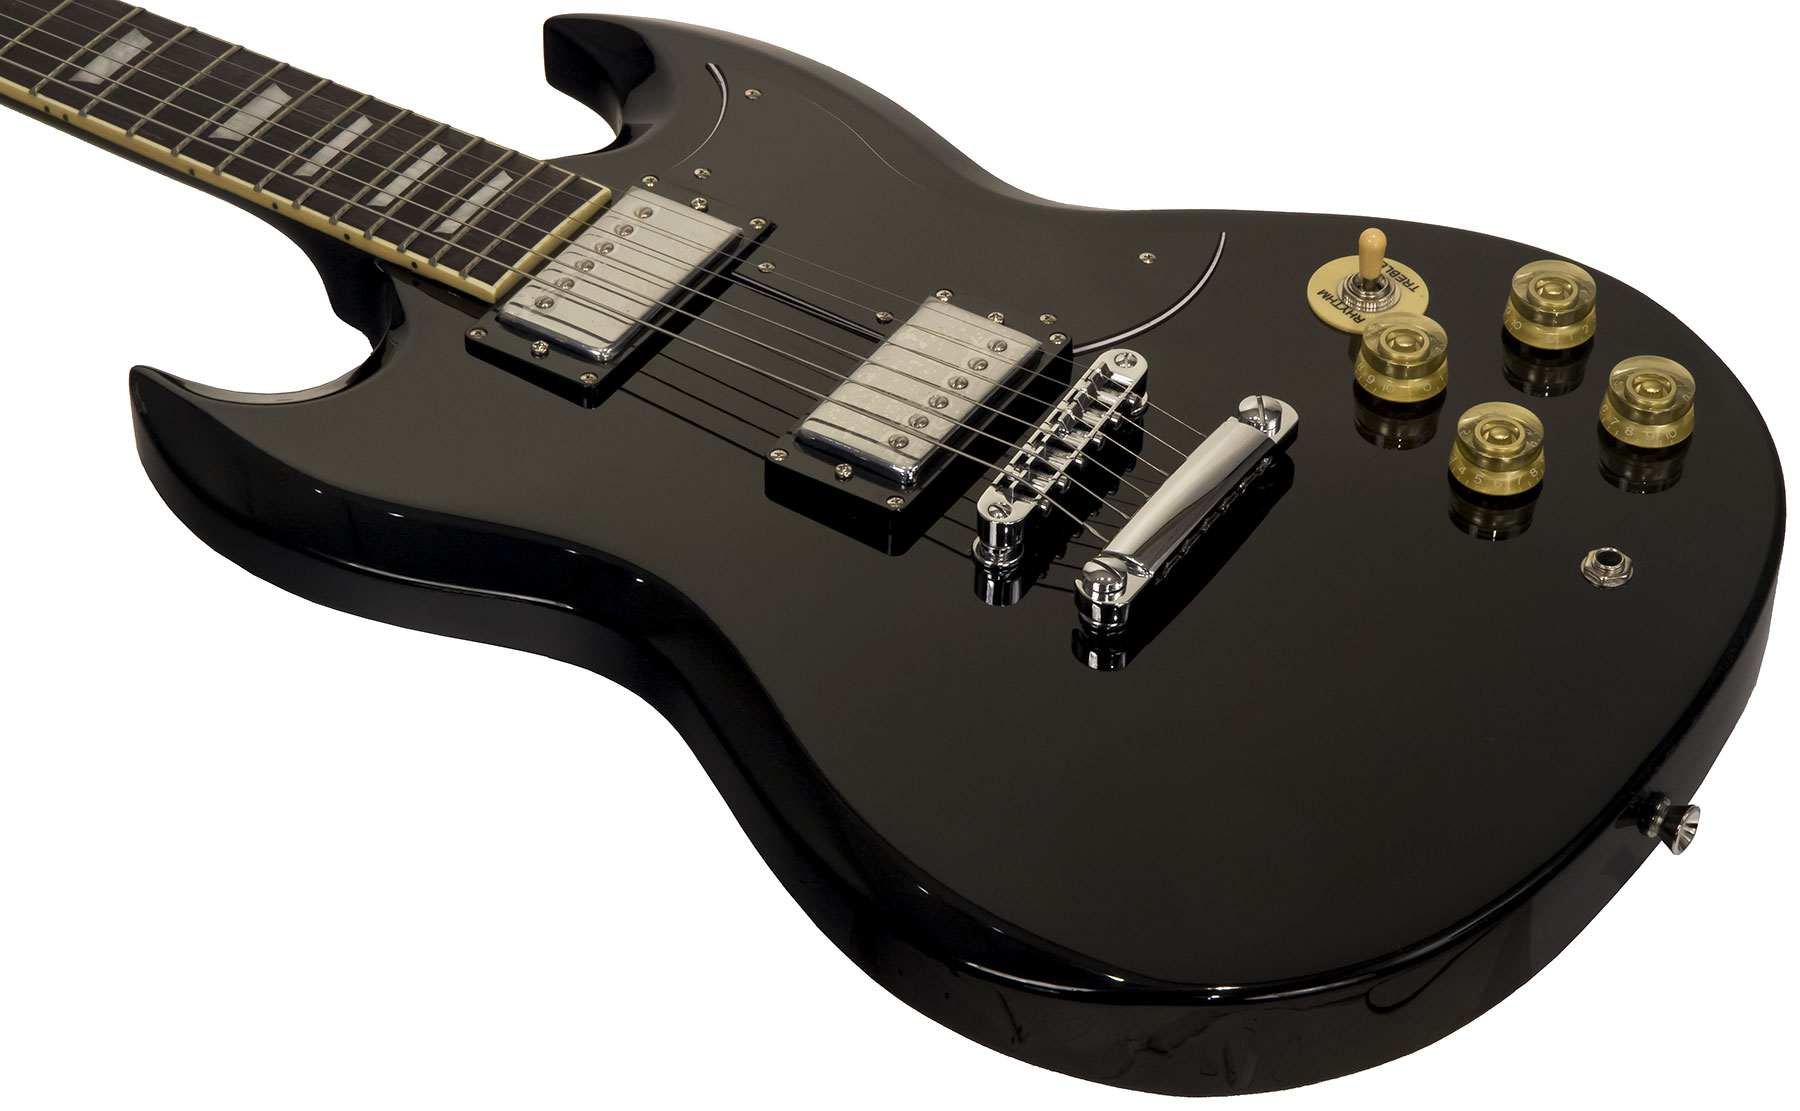 Eastone Sdc70 +marshall Mg10g Gold +cable +housse +courroie +mediators - Black - Pack Guitare Électrique - Variation 3